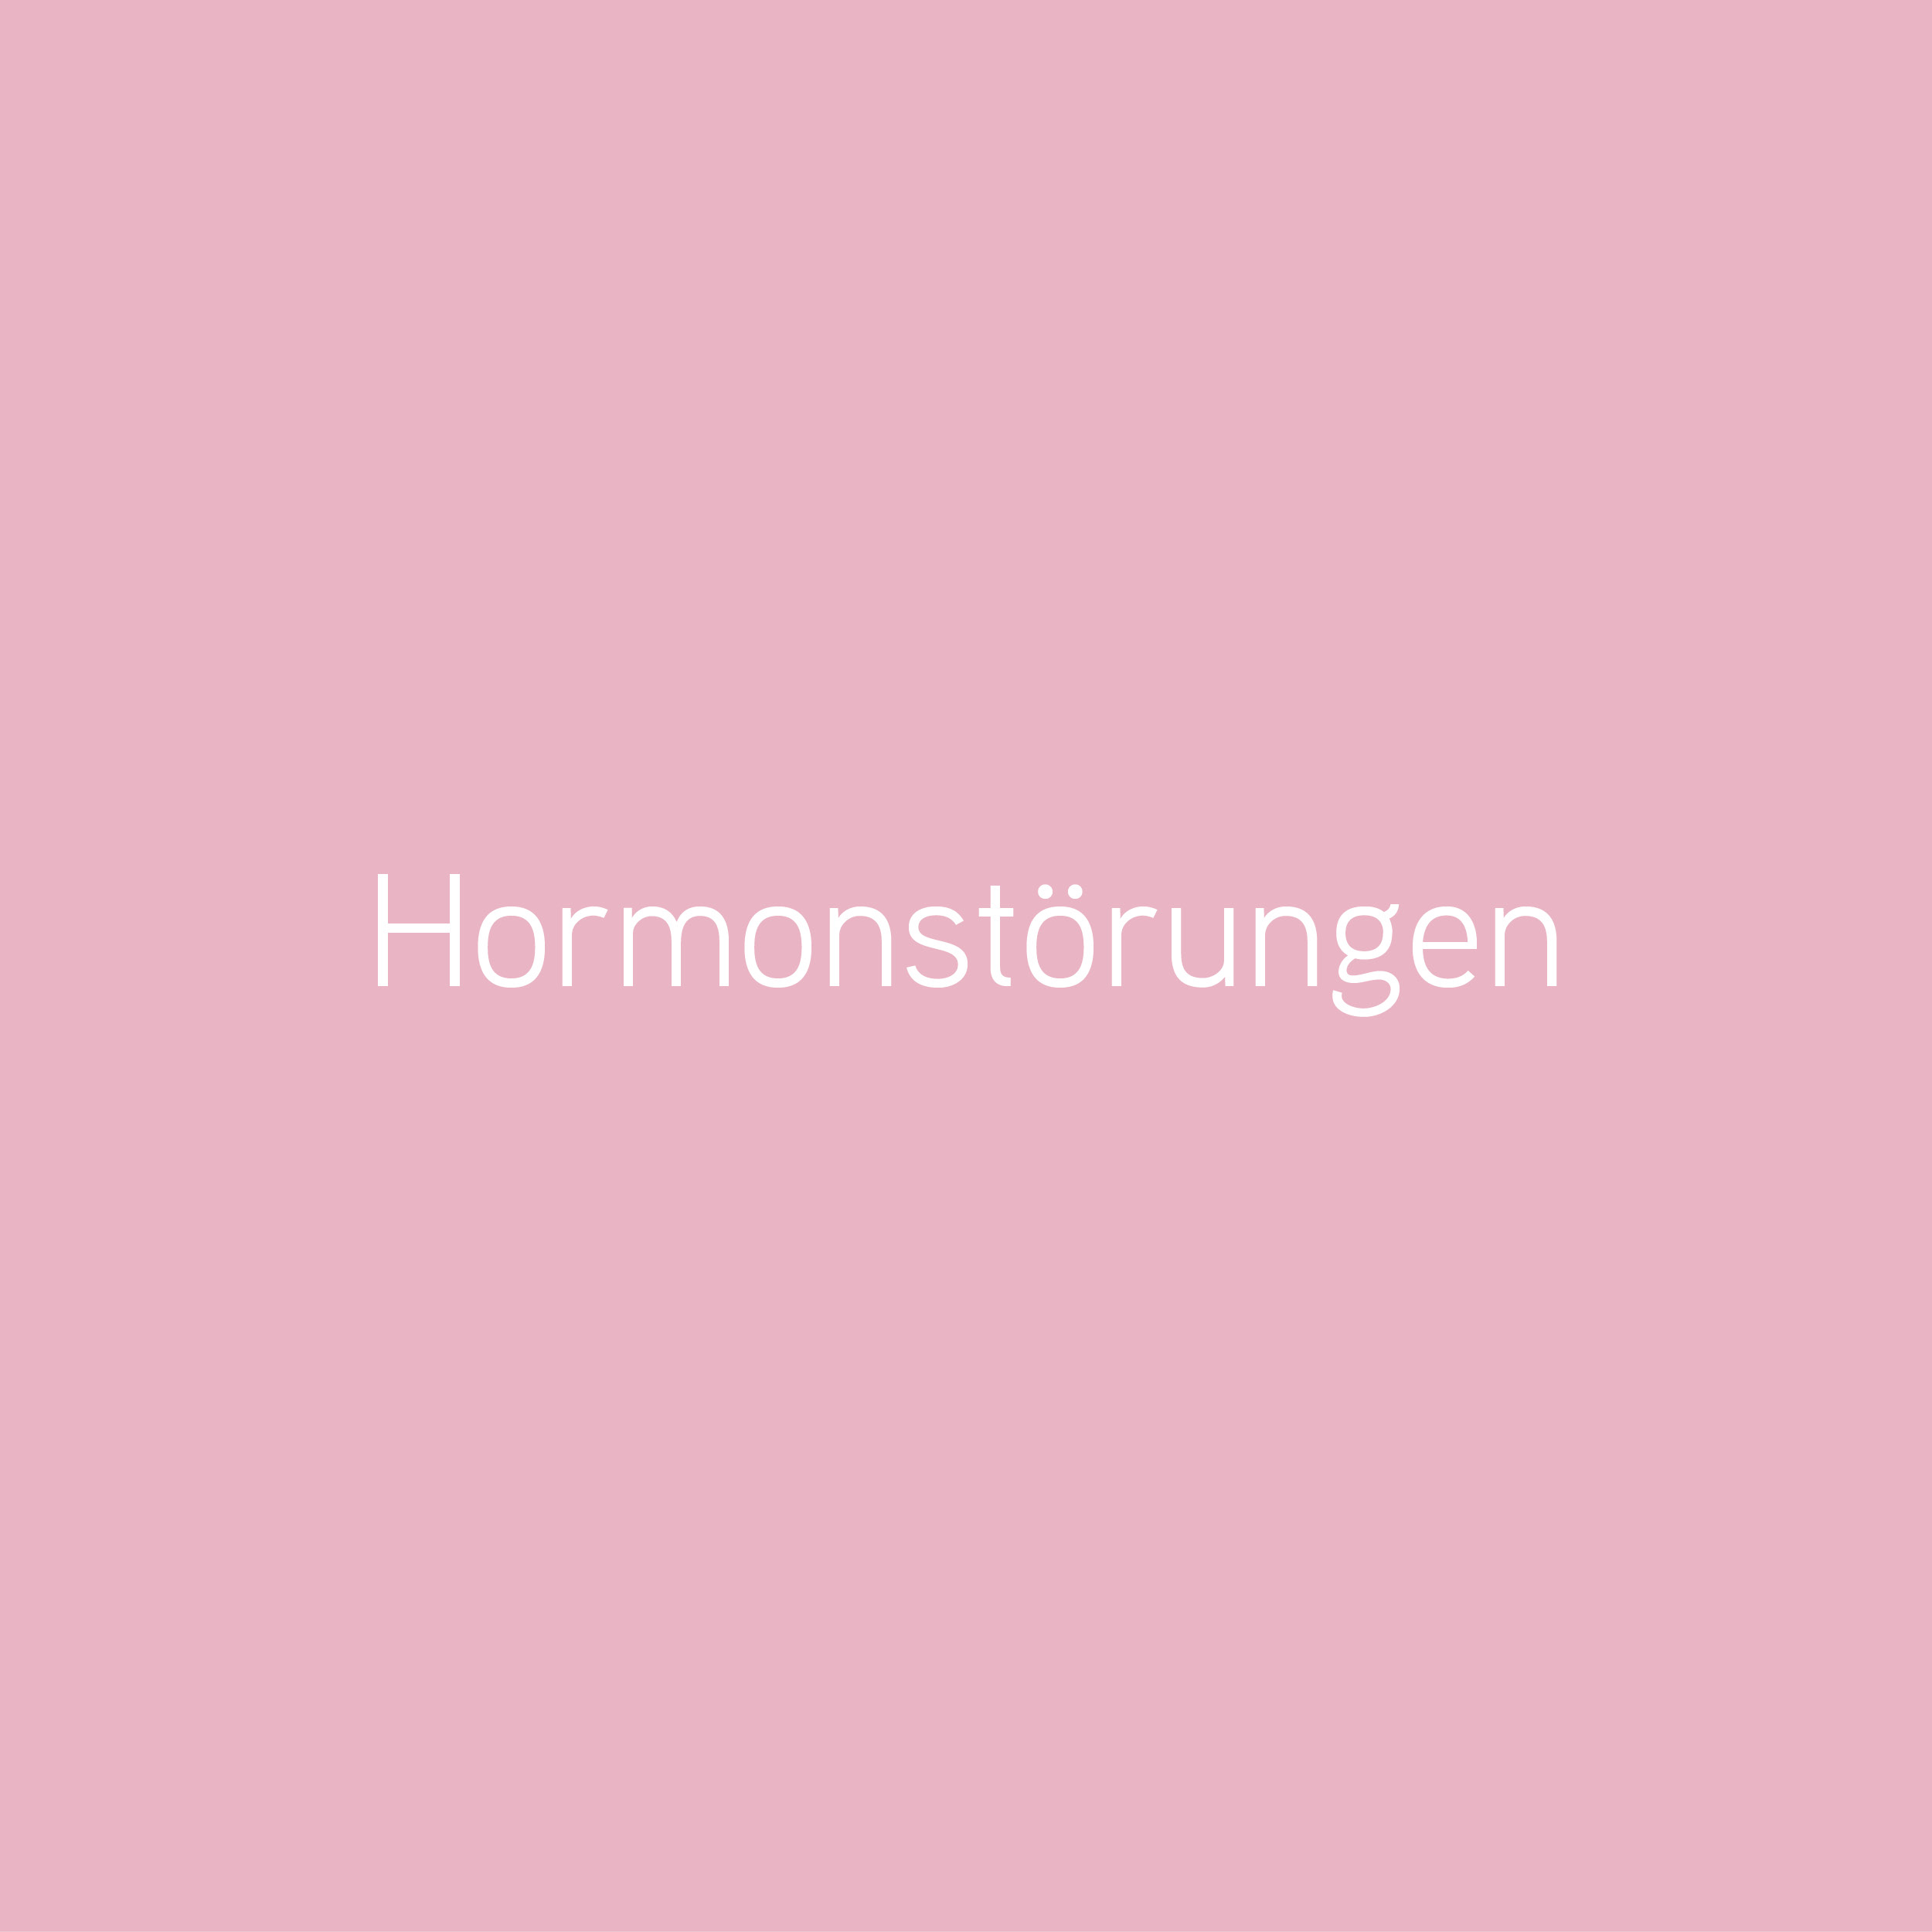 Hormonstörungen